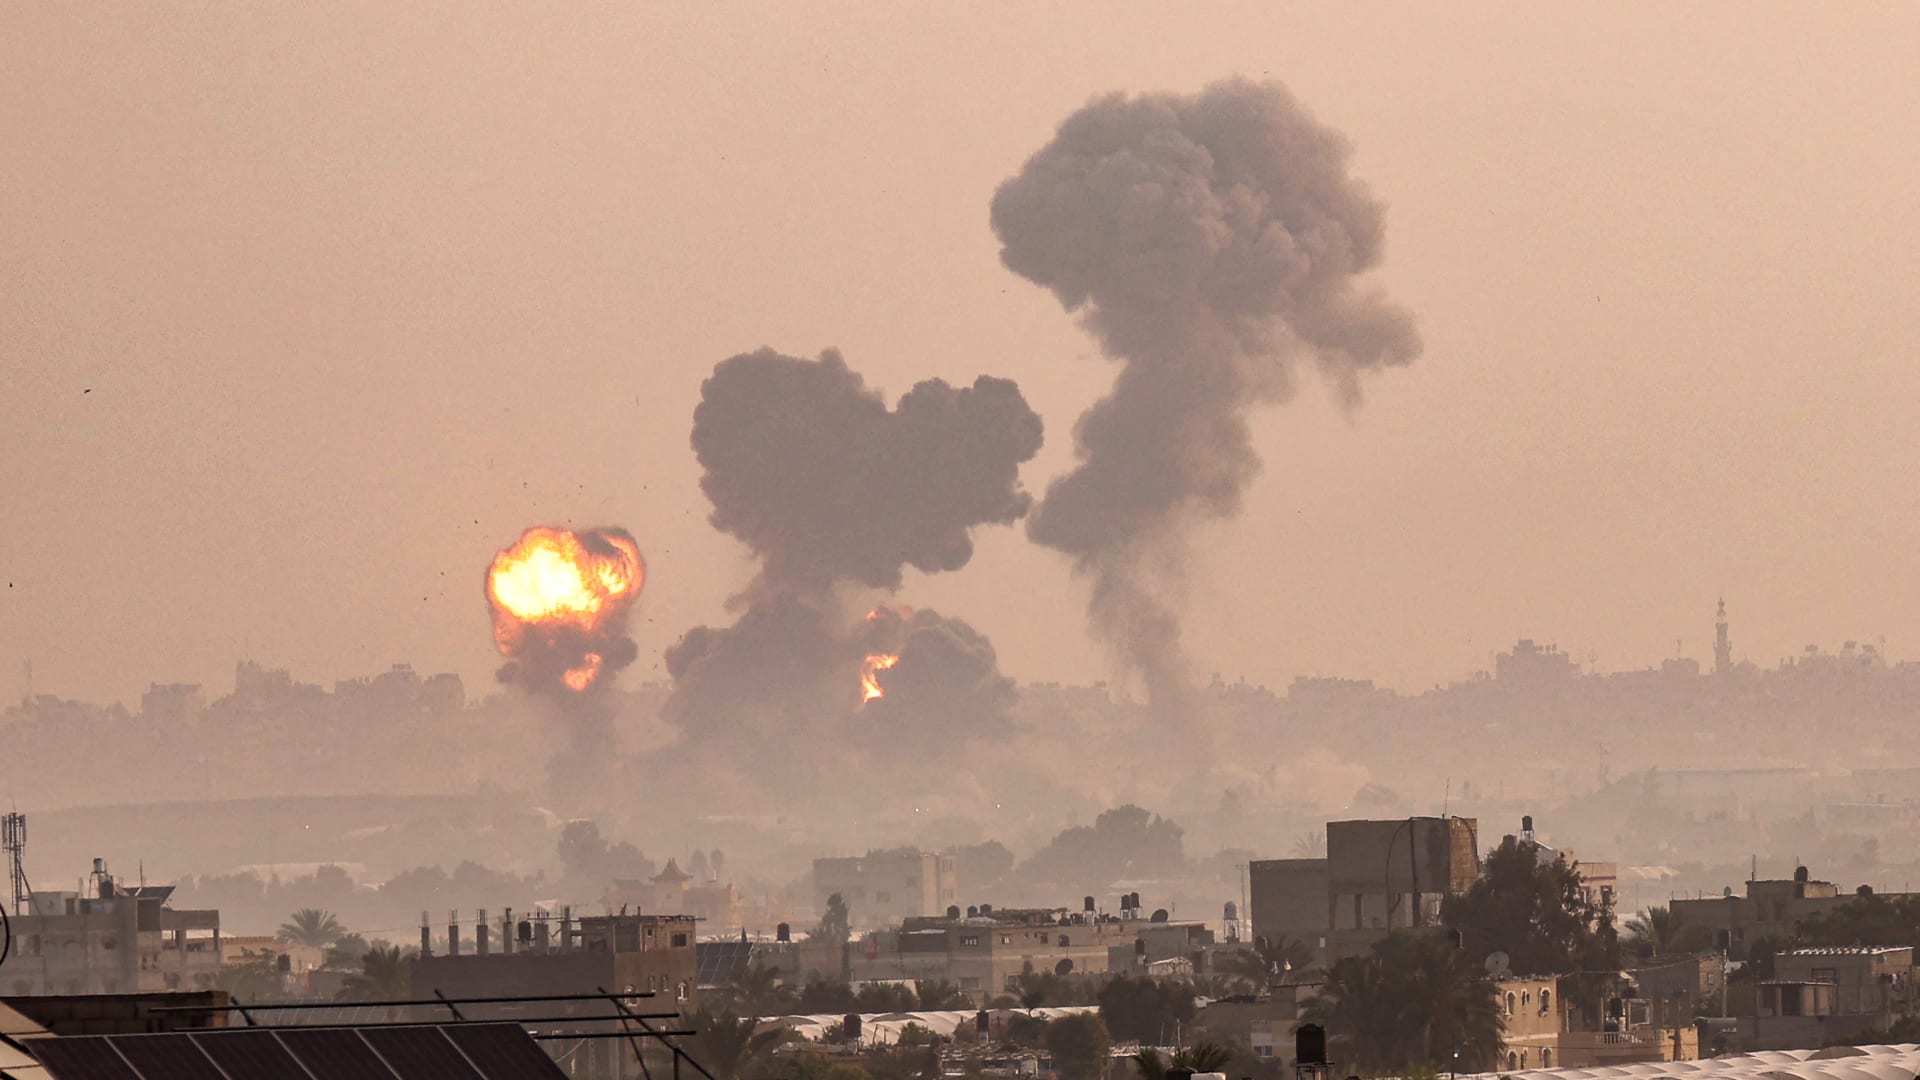 Gaza pummelled by fresh Israeli strikes, more than 200 dead in a week